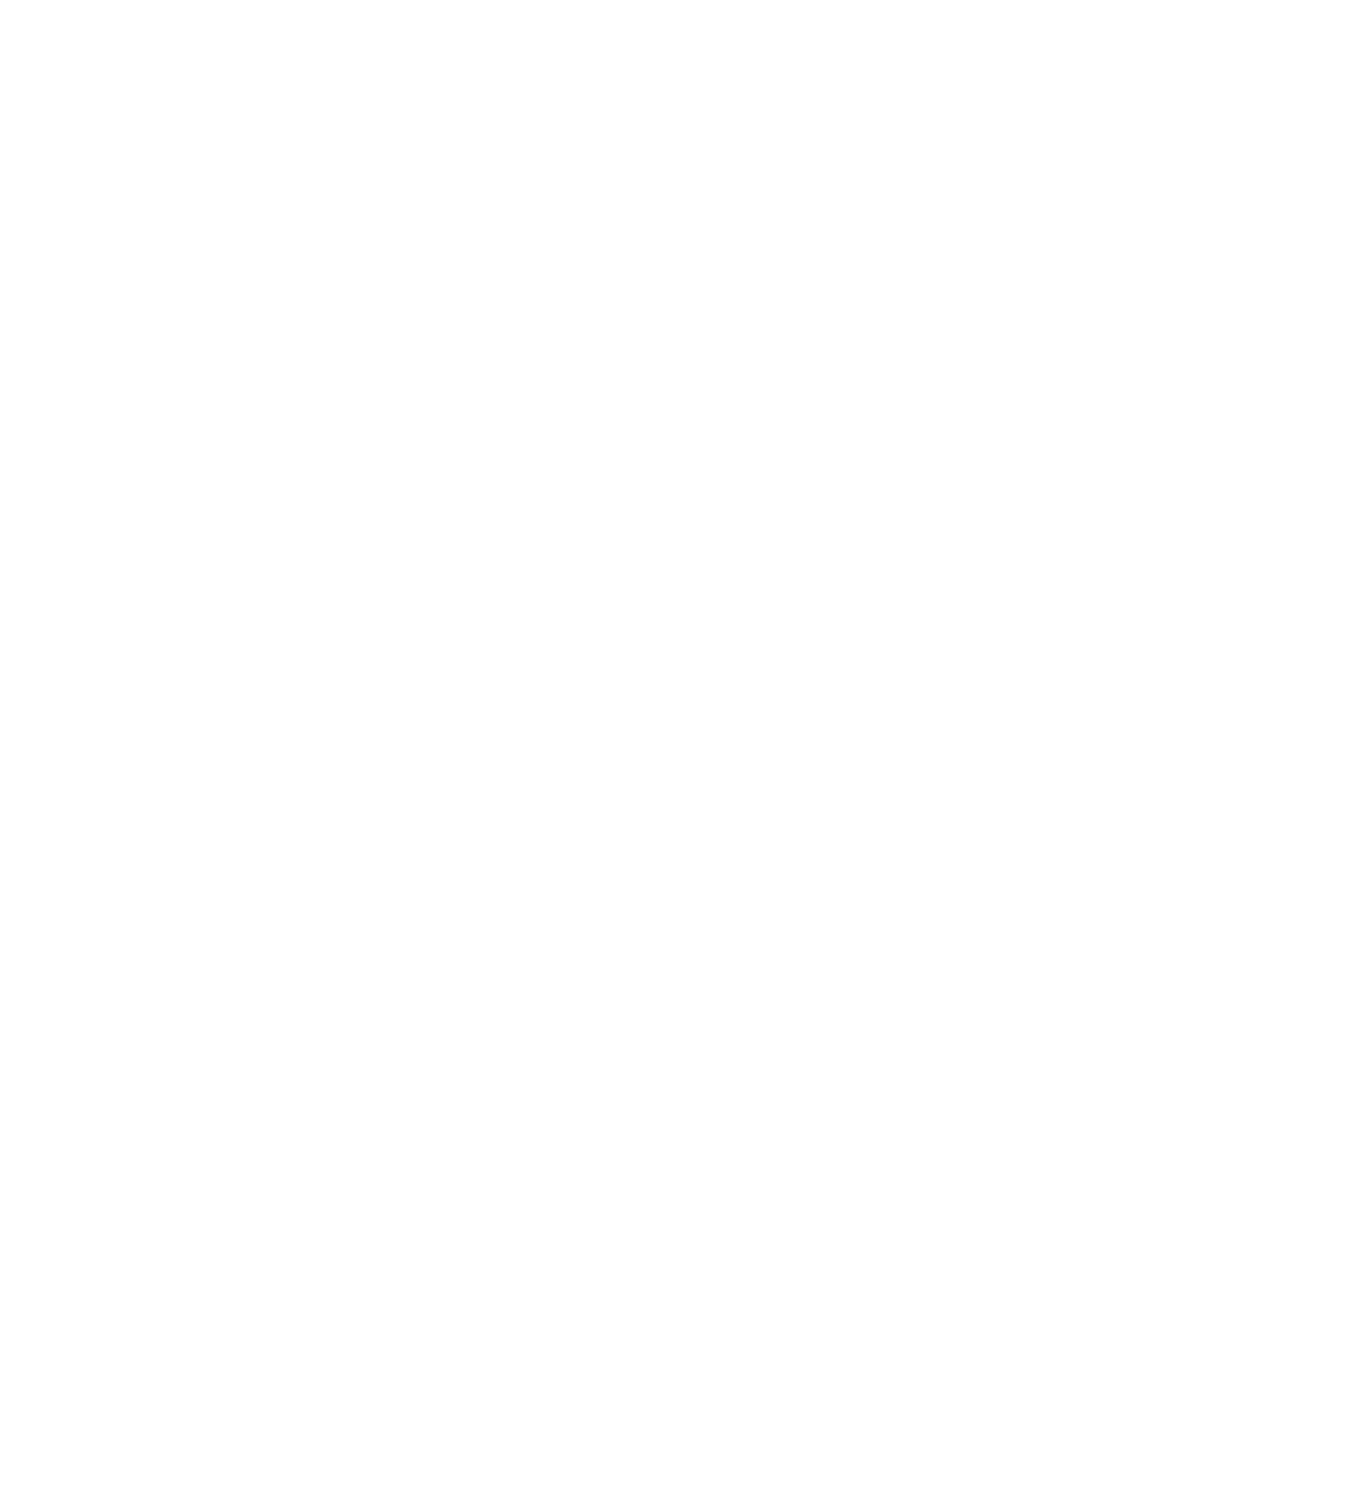 cBrain logo for dark backgrounds (transparent PNG)